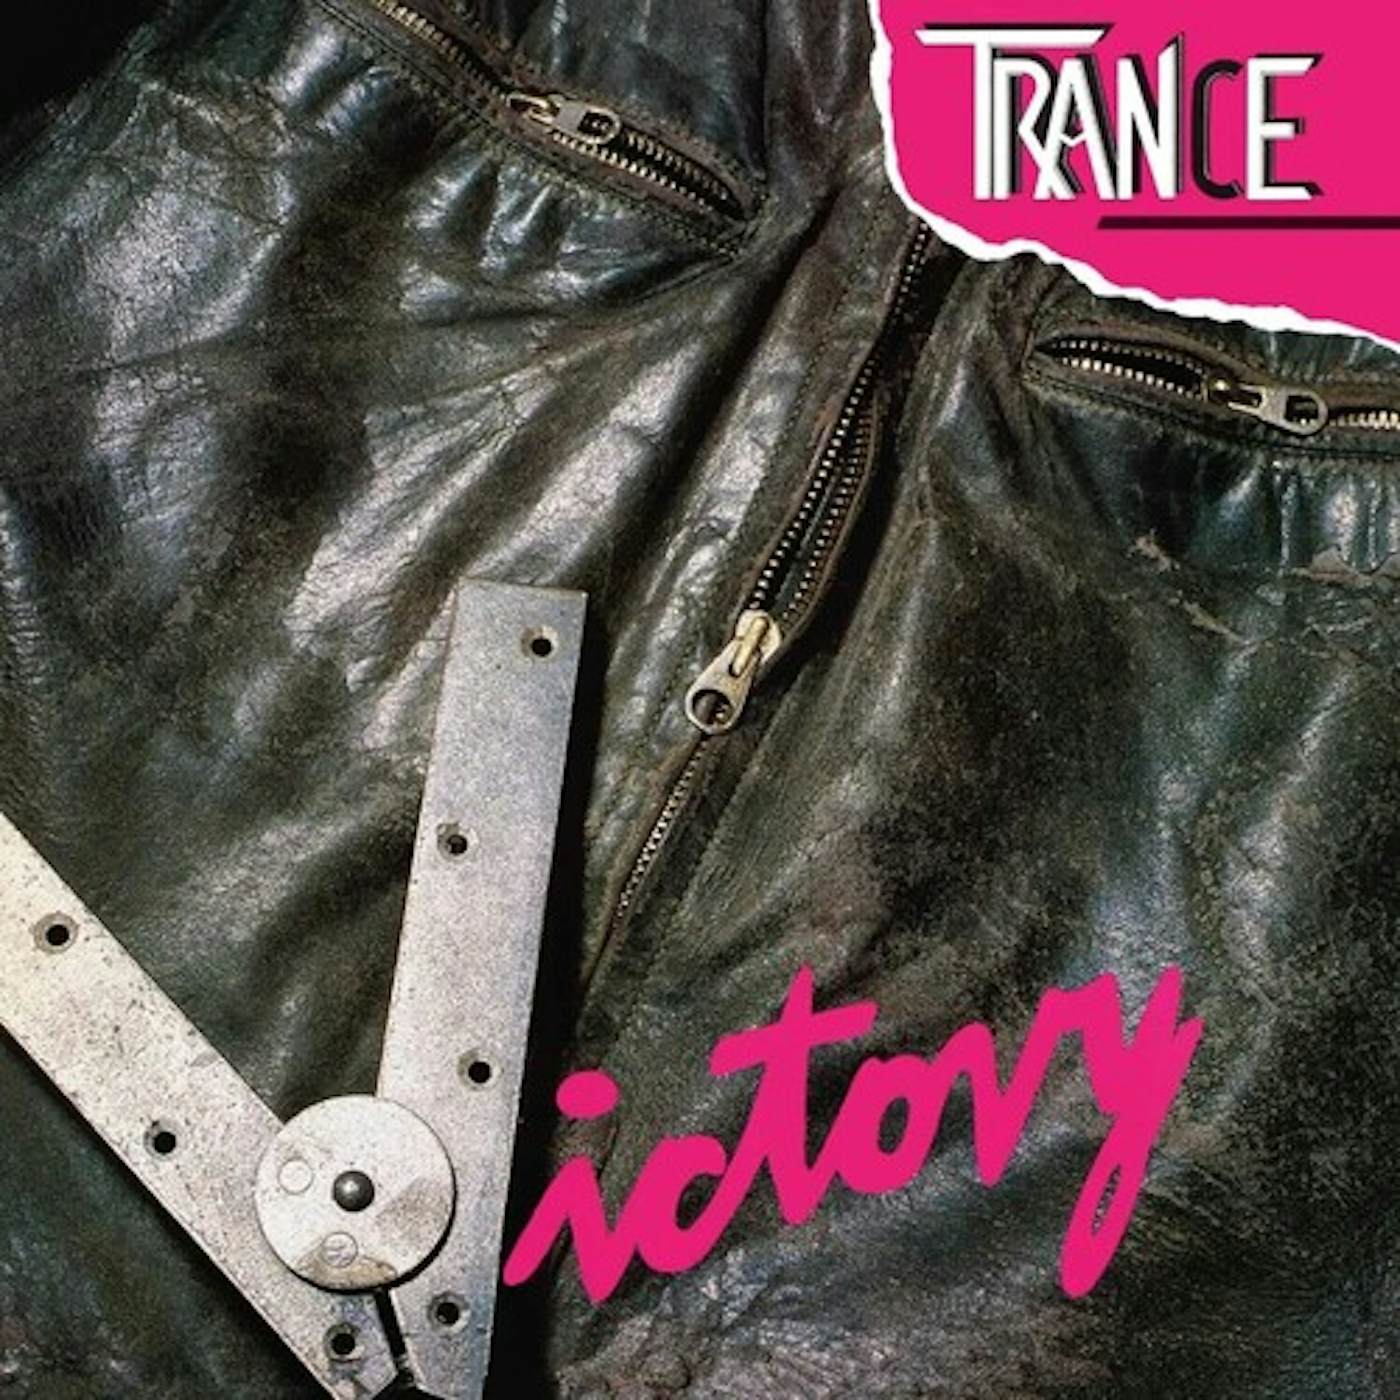 Trance Victory Vinyl Record